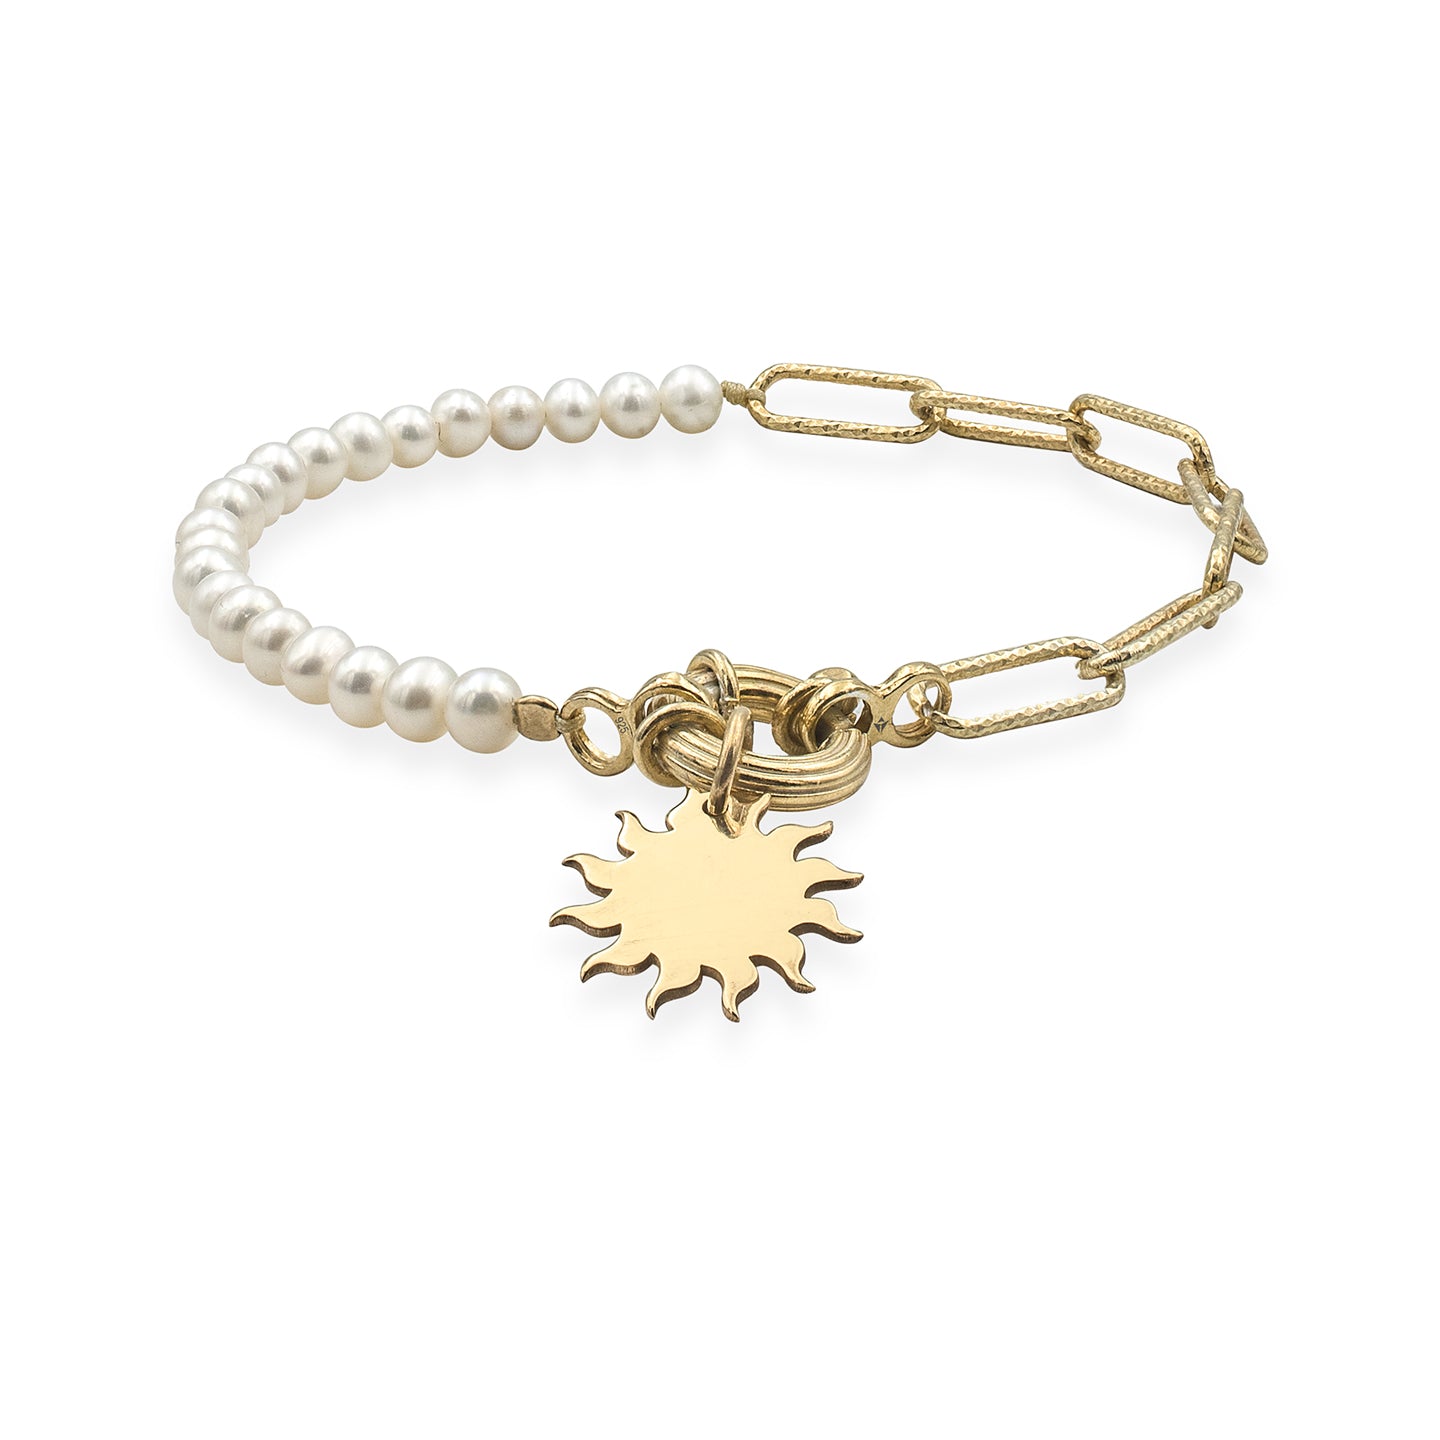 Bratara argint lant si perle SunShine - placata aur galben 18K